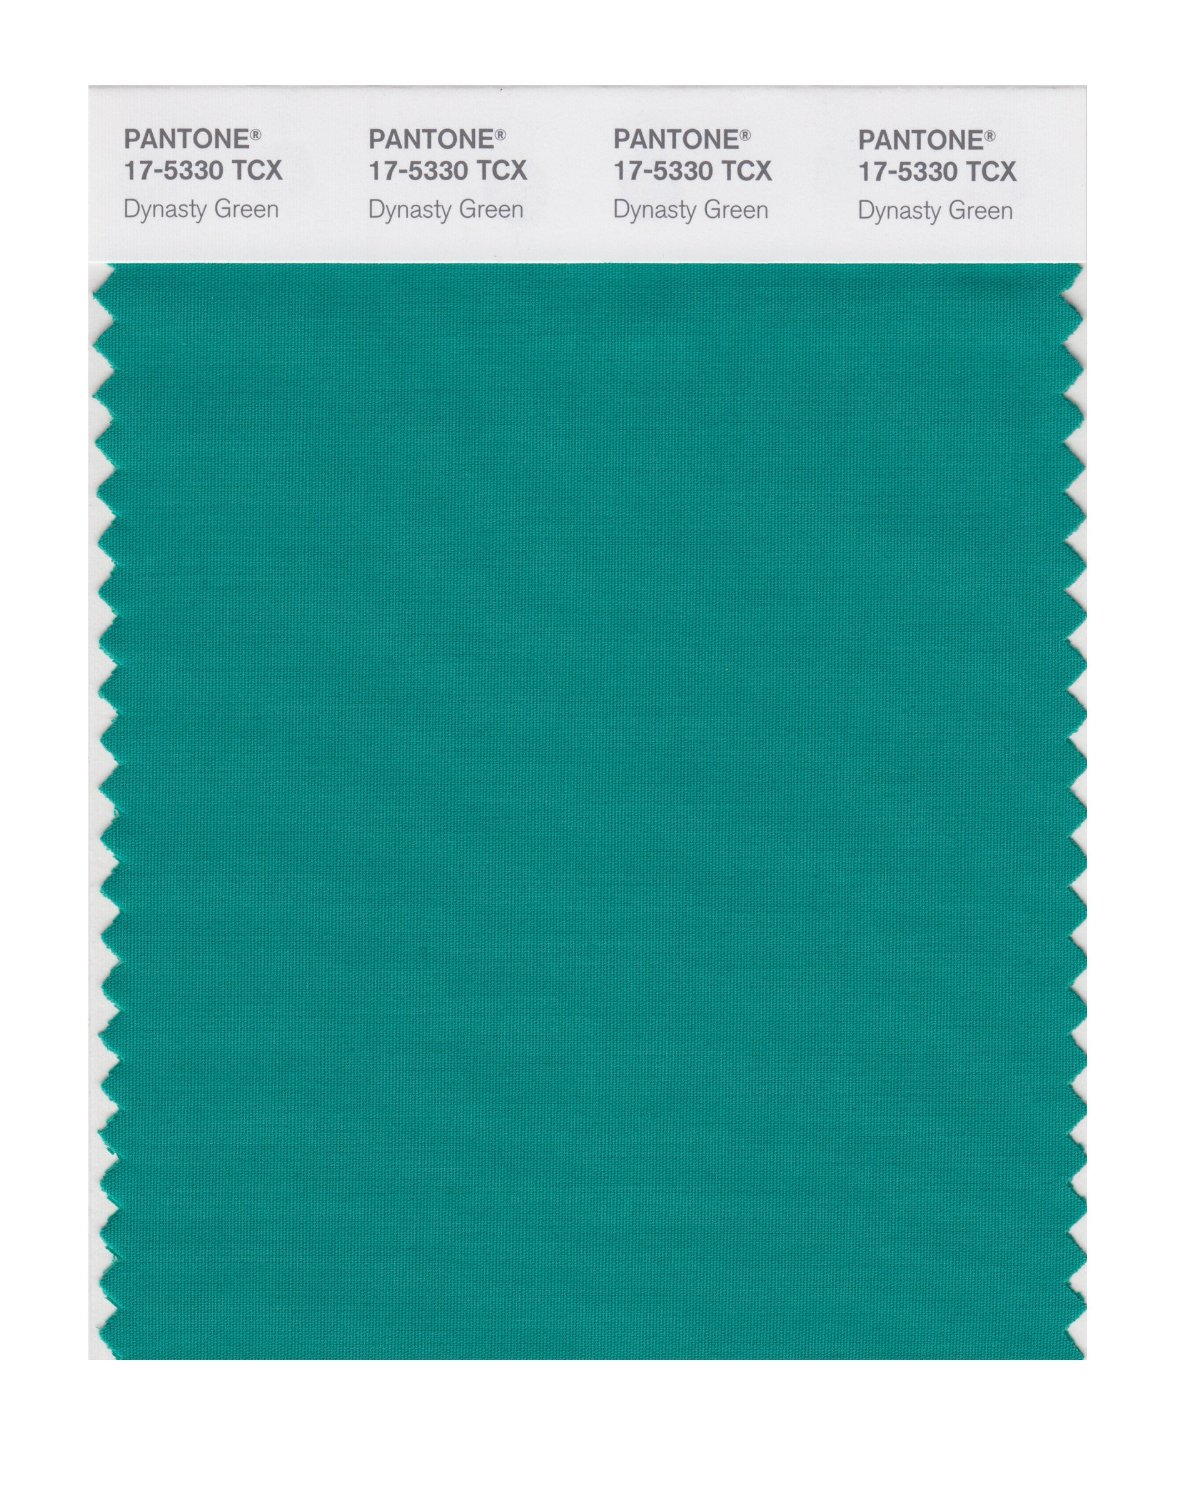 Pantone Cotton Swatch 17-5330 Dynasty Green